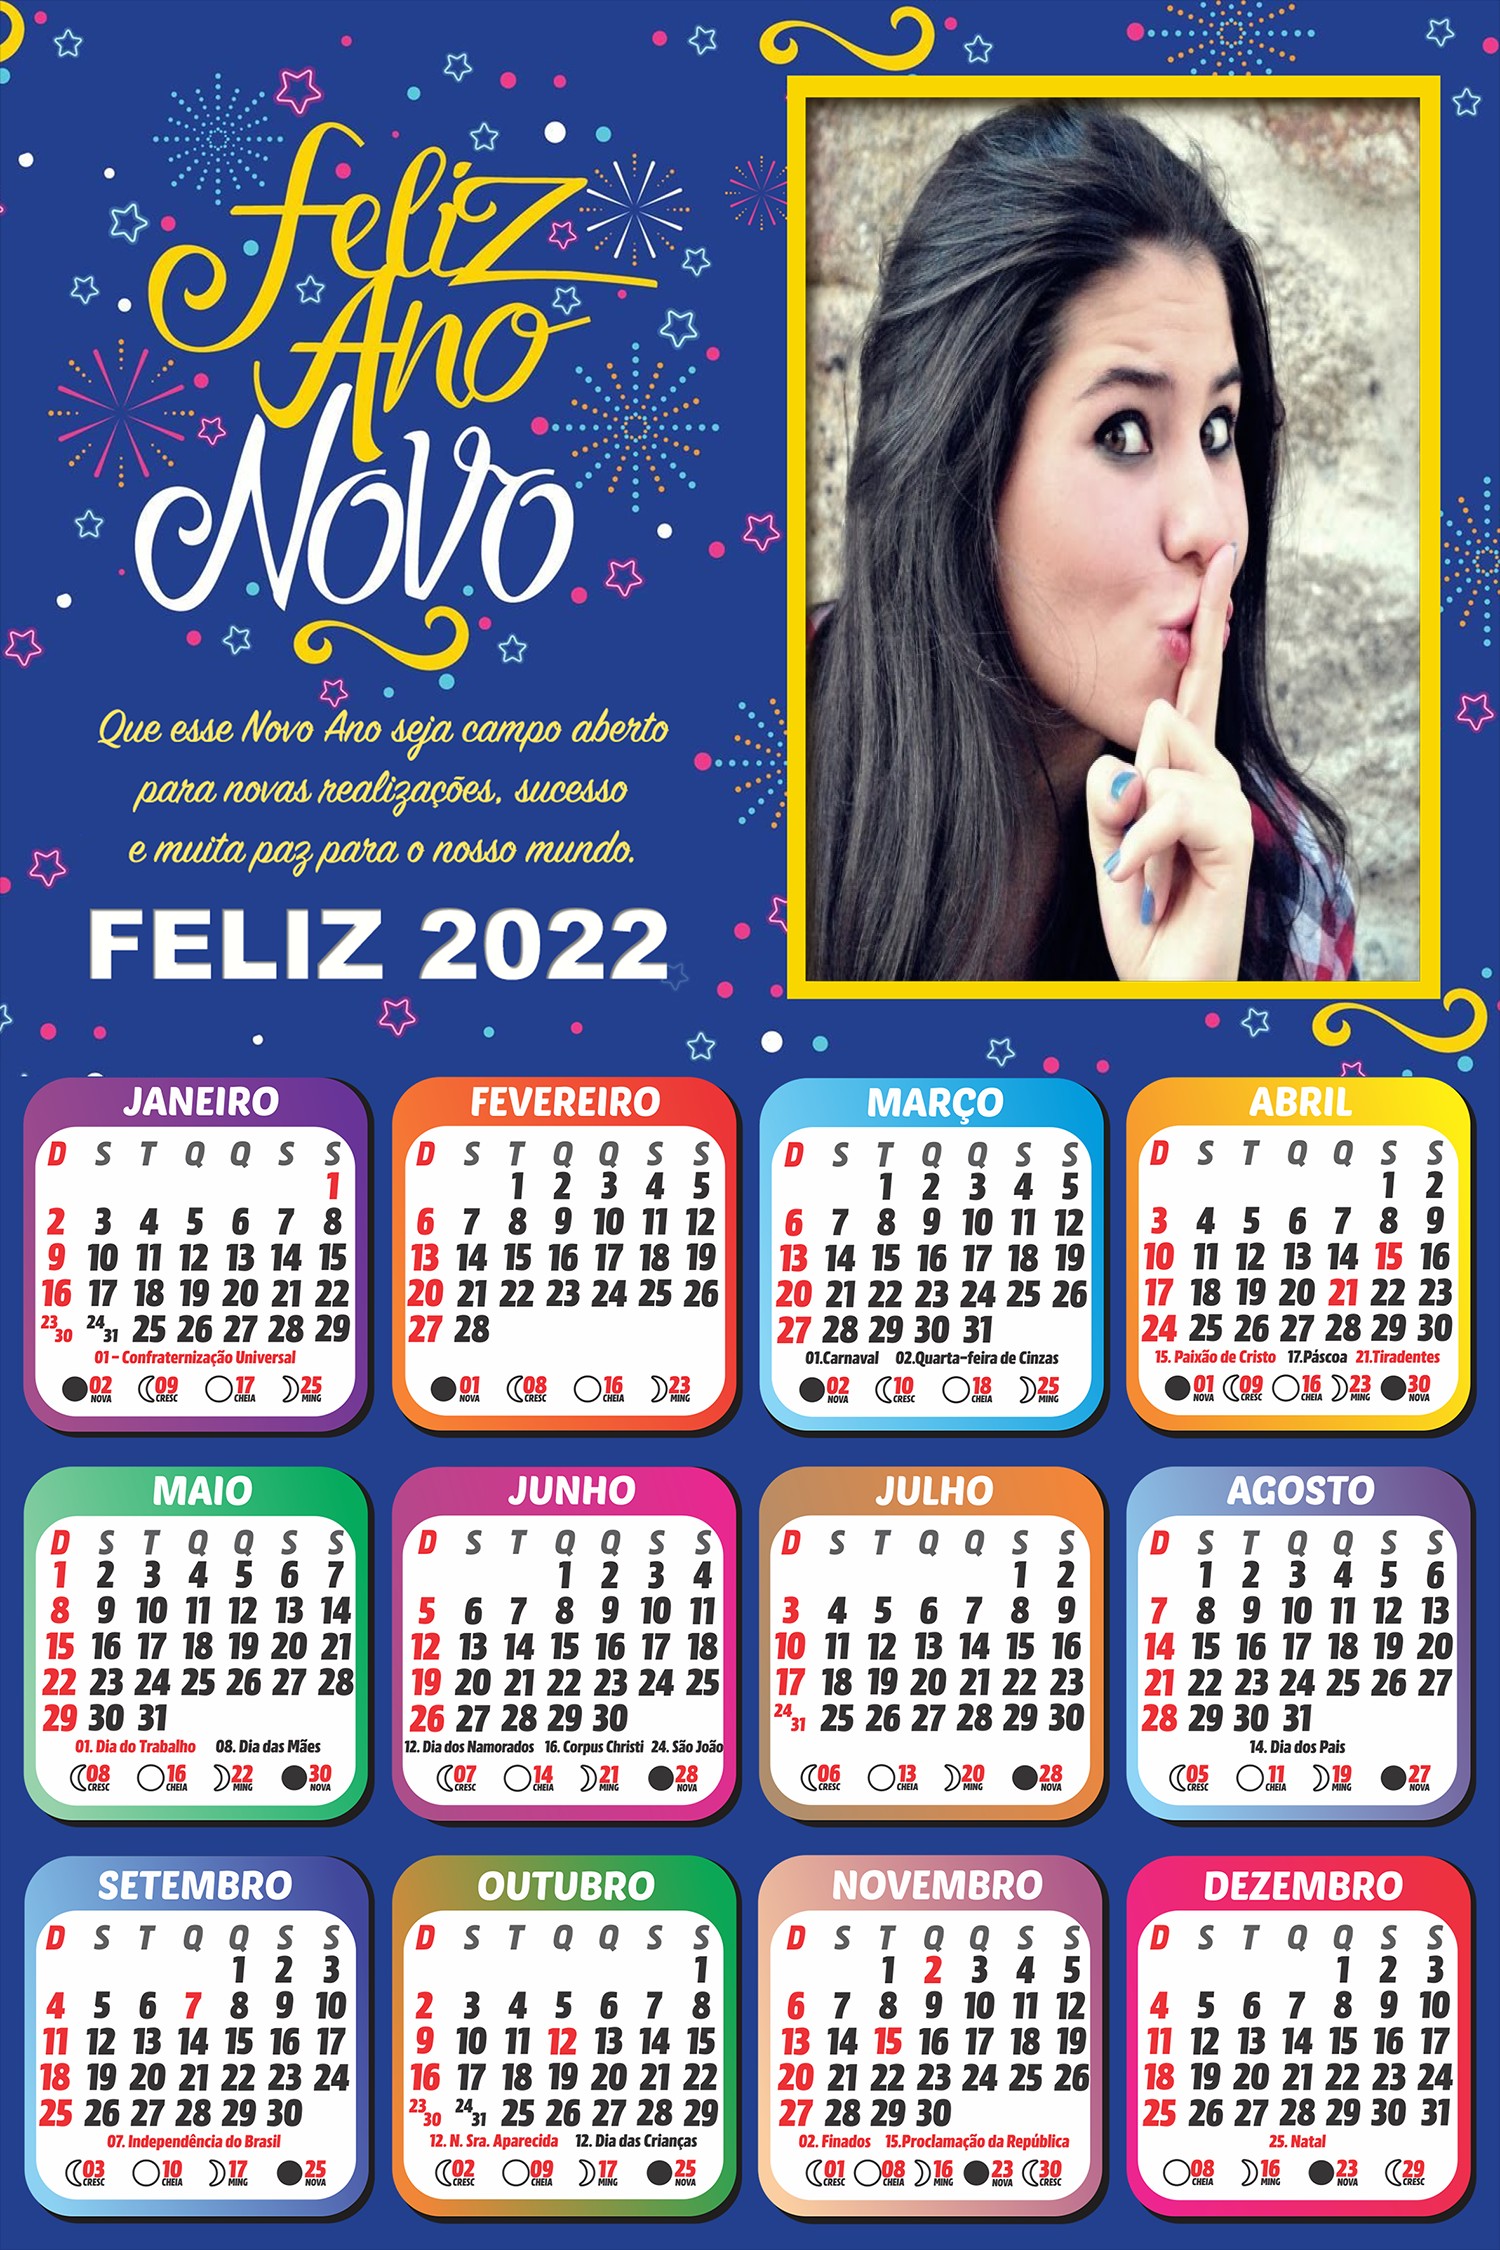 montar-foto-online-calendario-2022-feliz-ano-novo